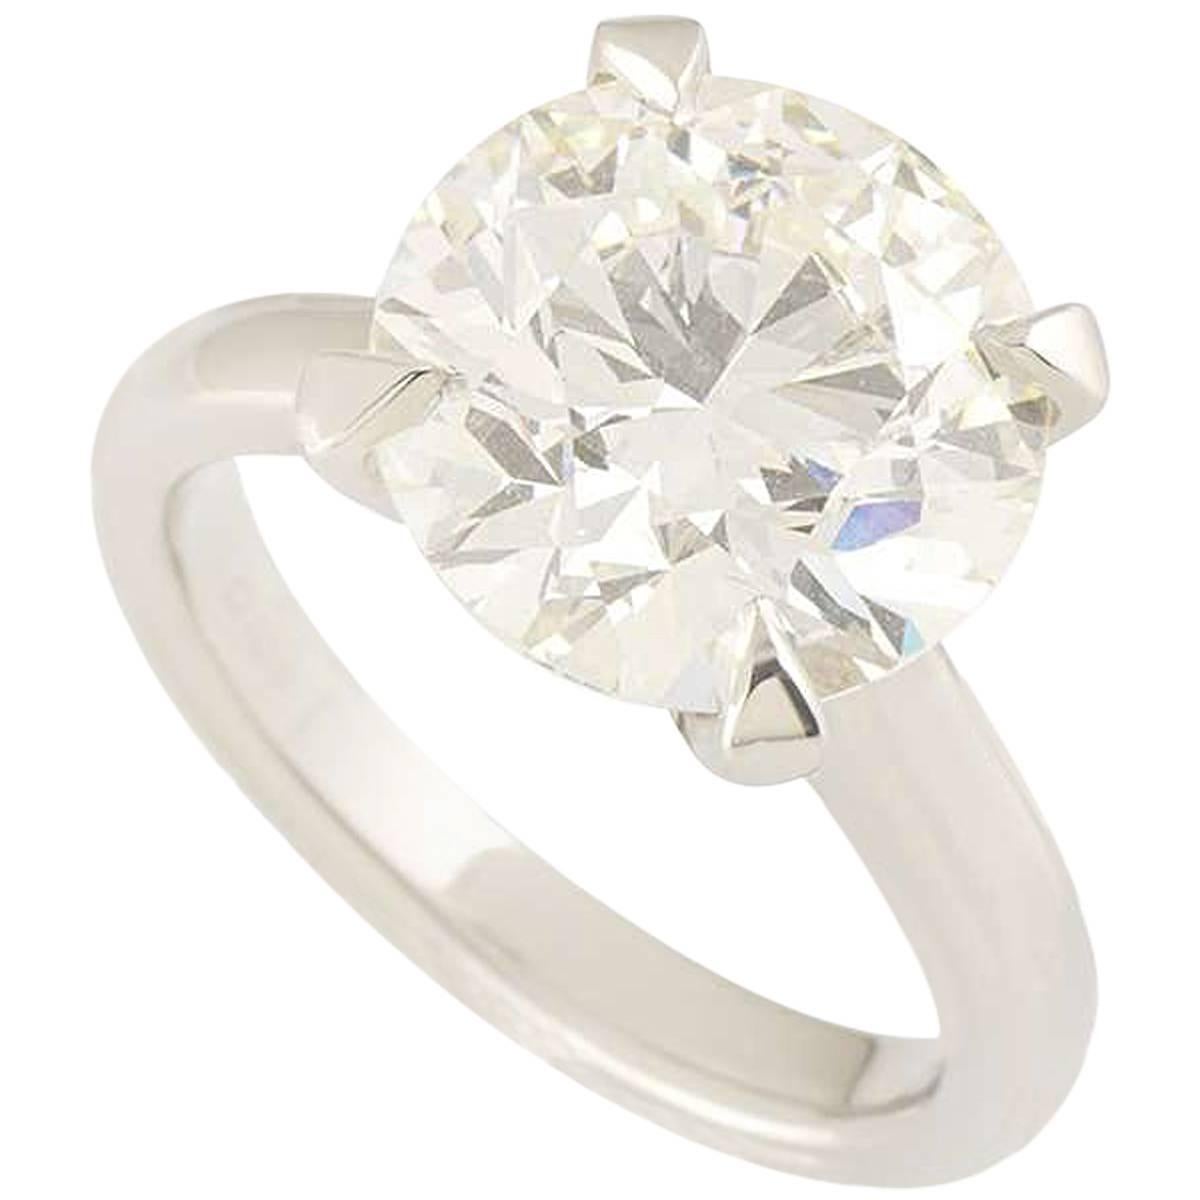 GIA Certified 5.46 Carat Round Brilliant Cut Diamond Engagement Ring